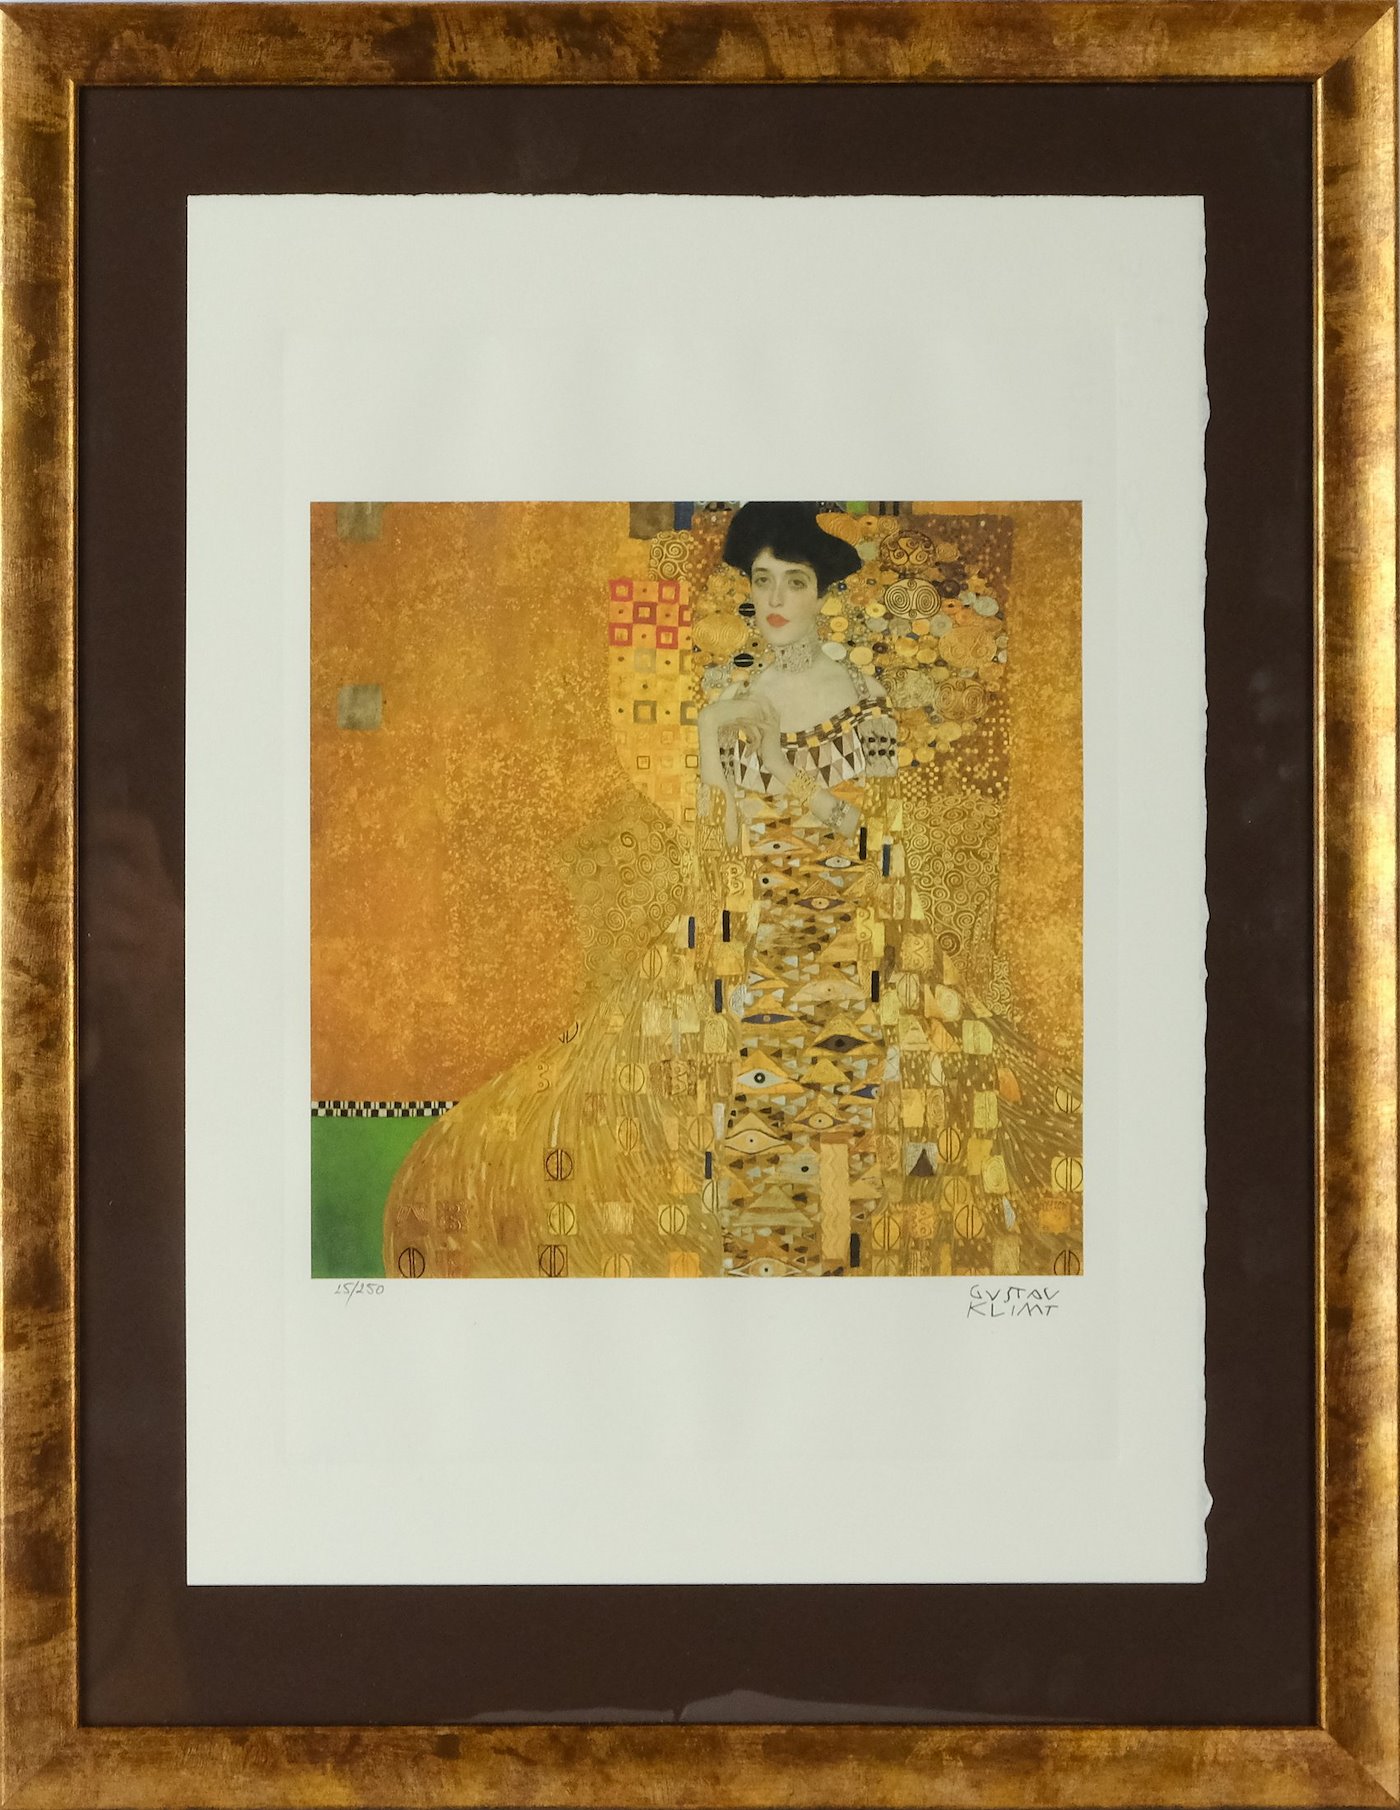 Gustav Klimt - Portrait of Adele Bloch - Bauer I